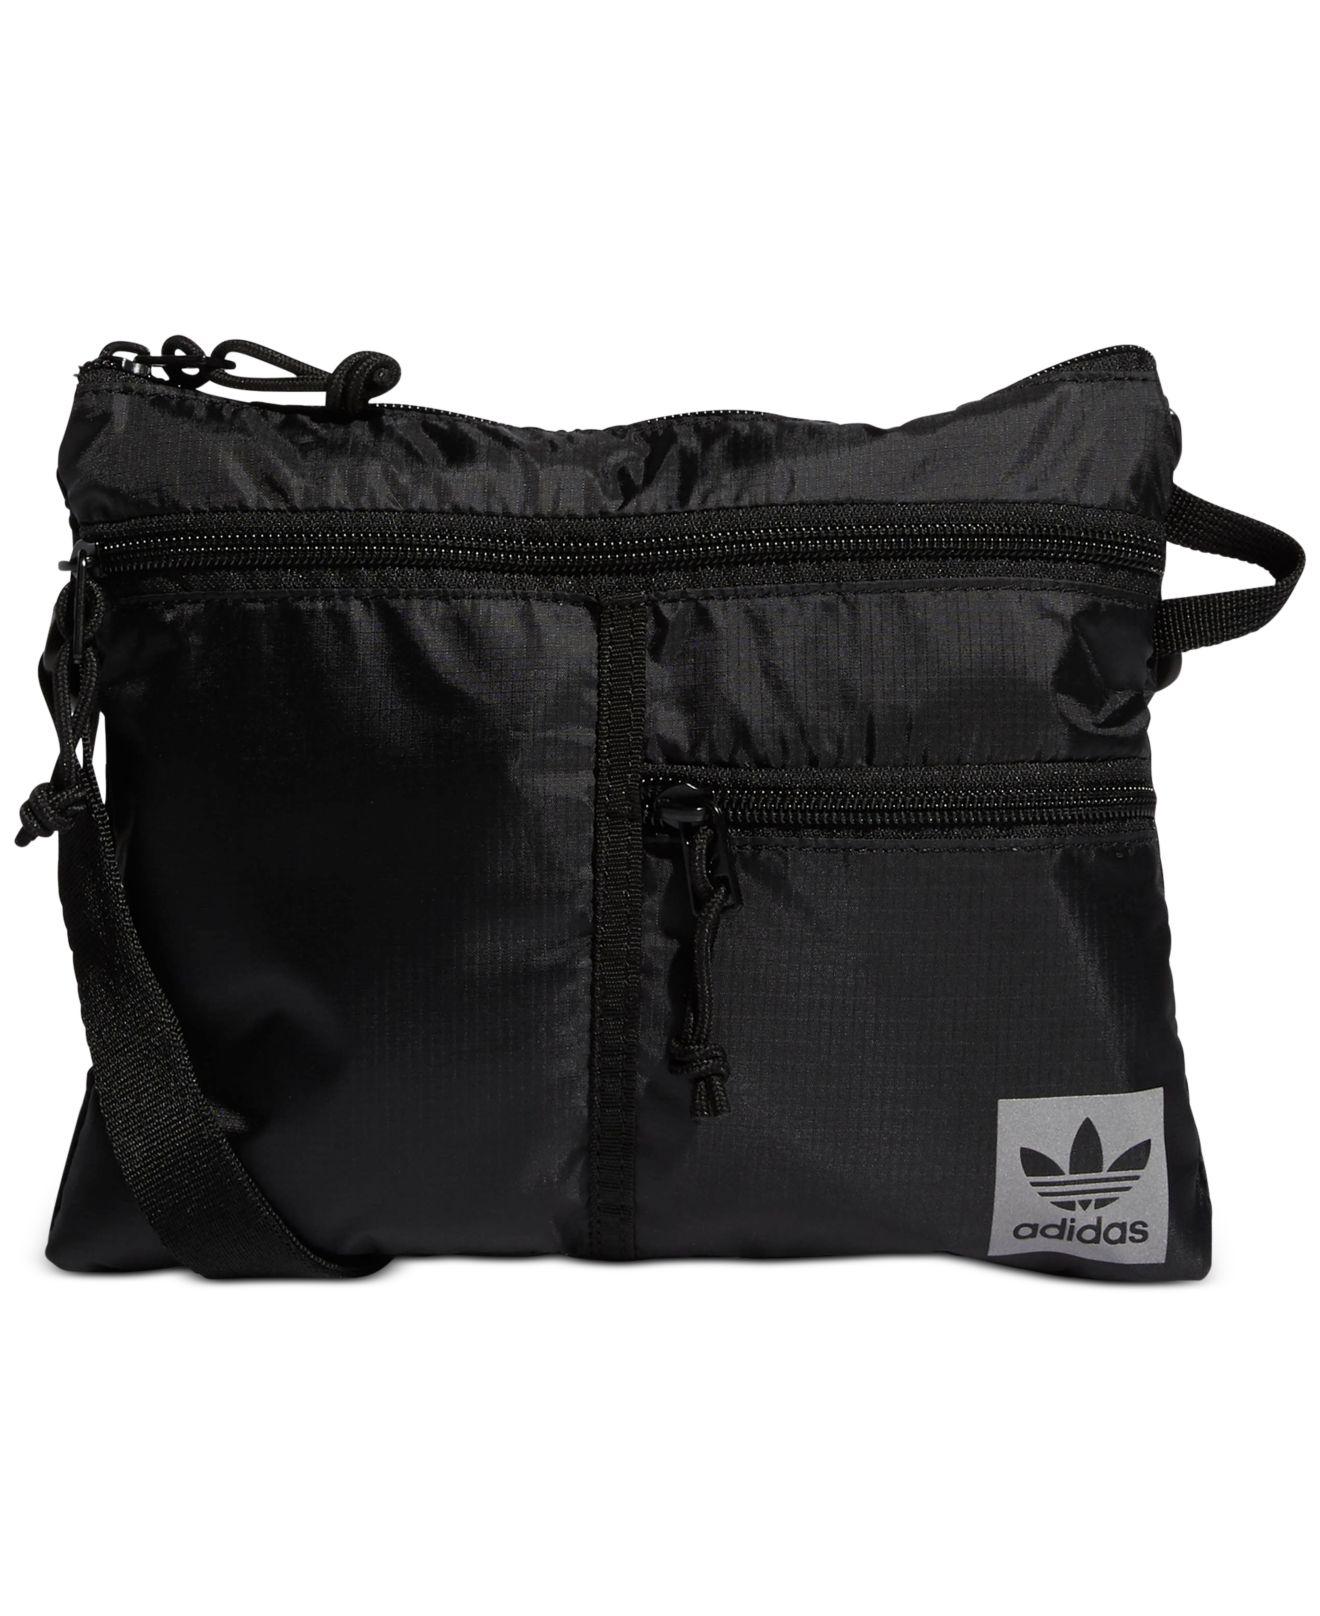 adidas Originals Black Crossbody Bags | Mercari